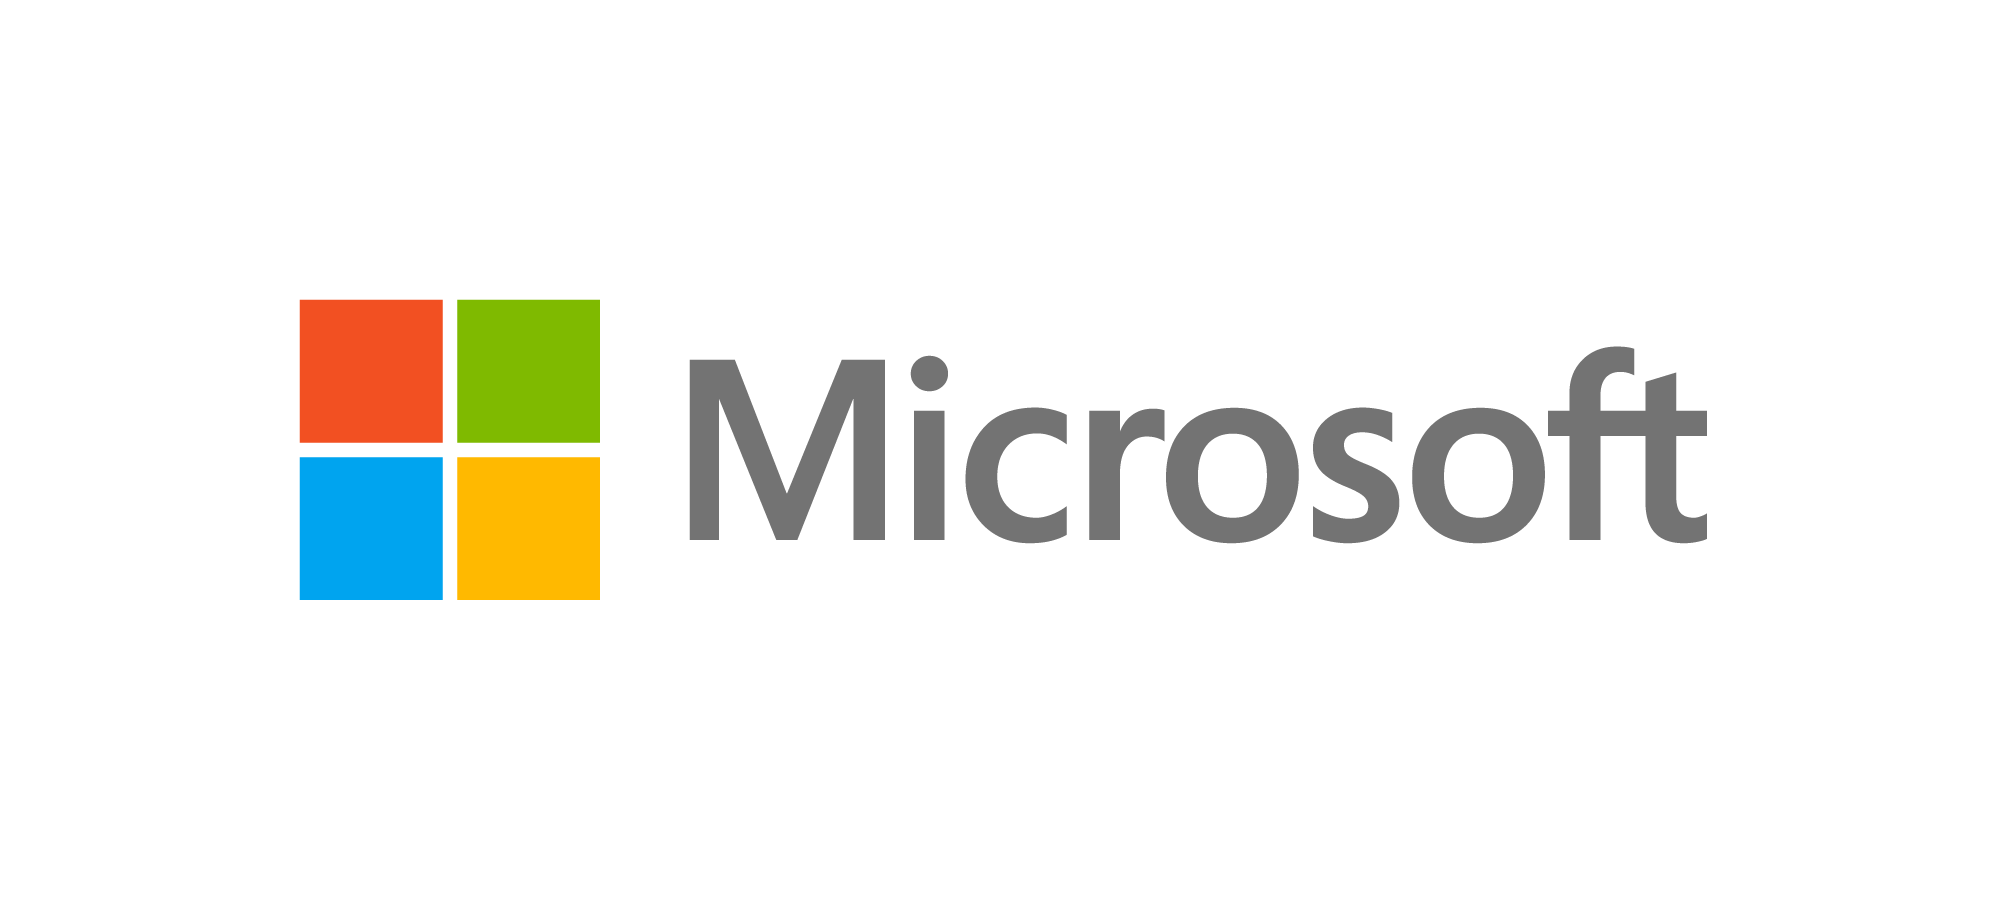 Microsoft 2019 : l’éditeur de logiciel intemporel